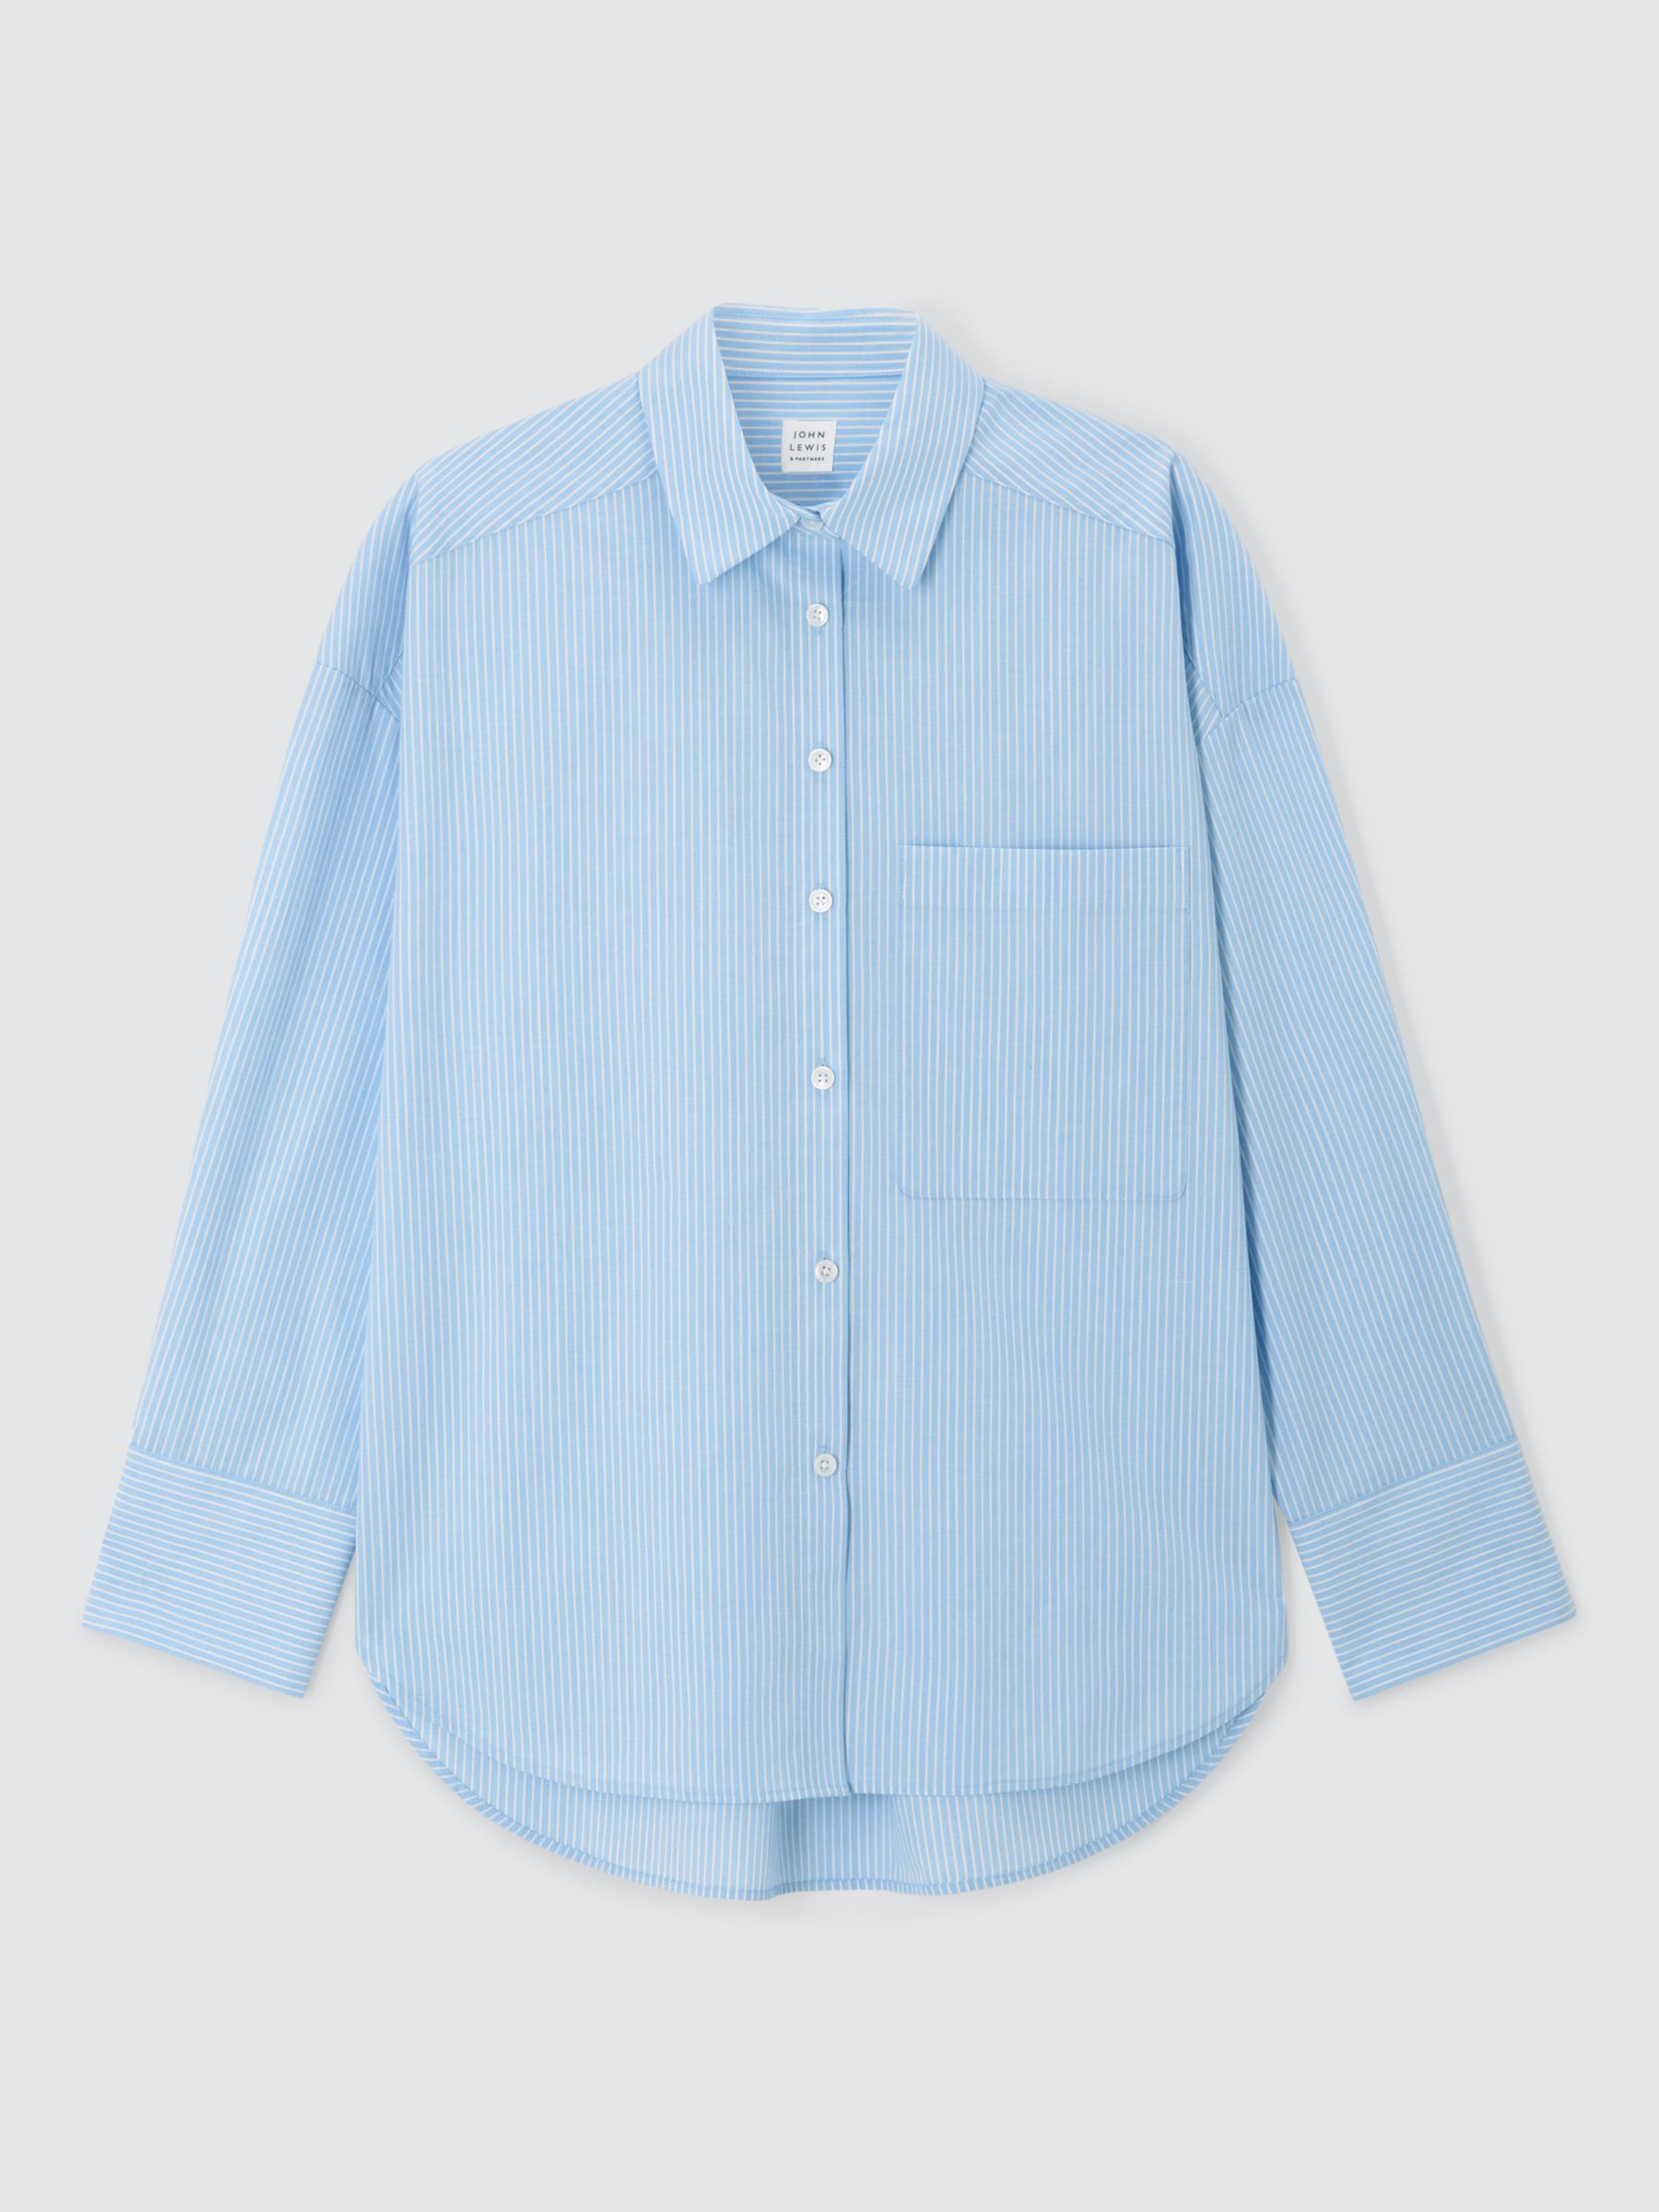 John Lewis Stripe Cotton Shirt, Blue, 12